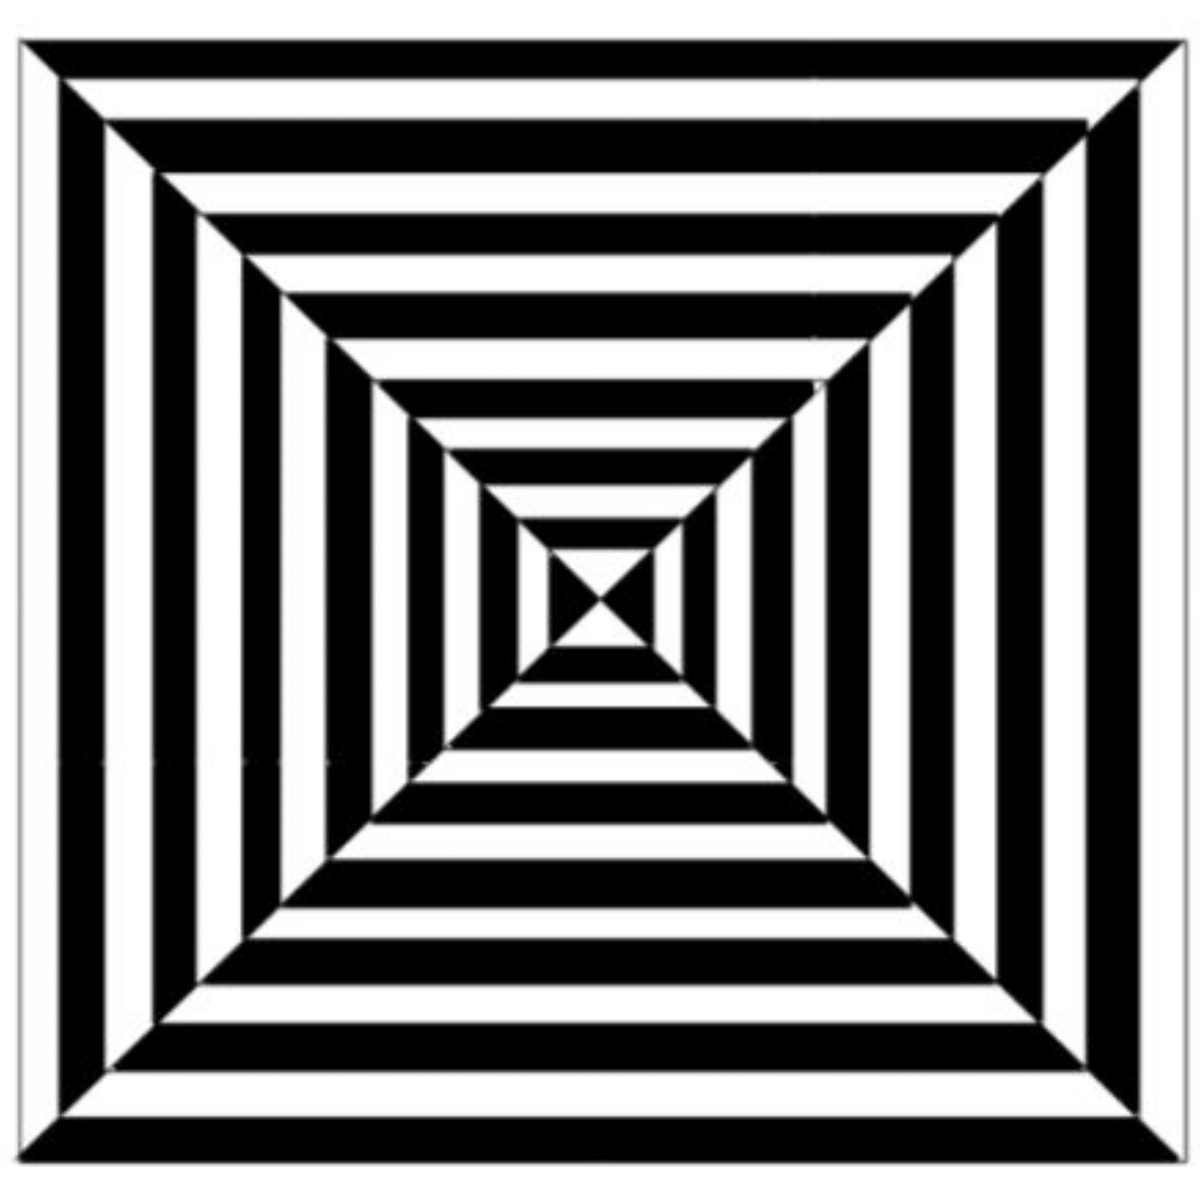 optical illusion artists famous